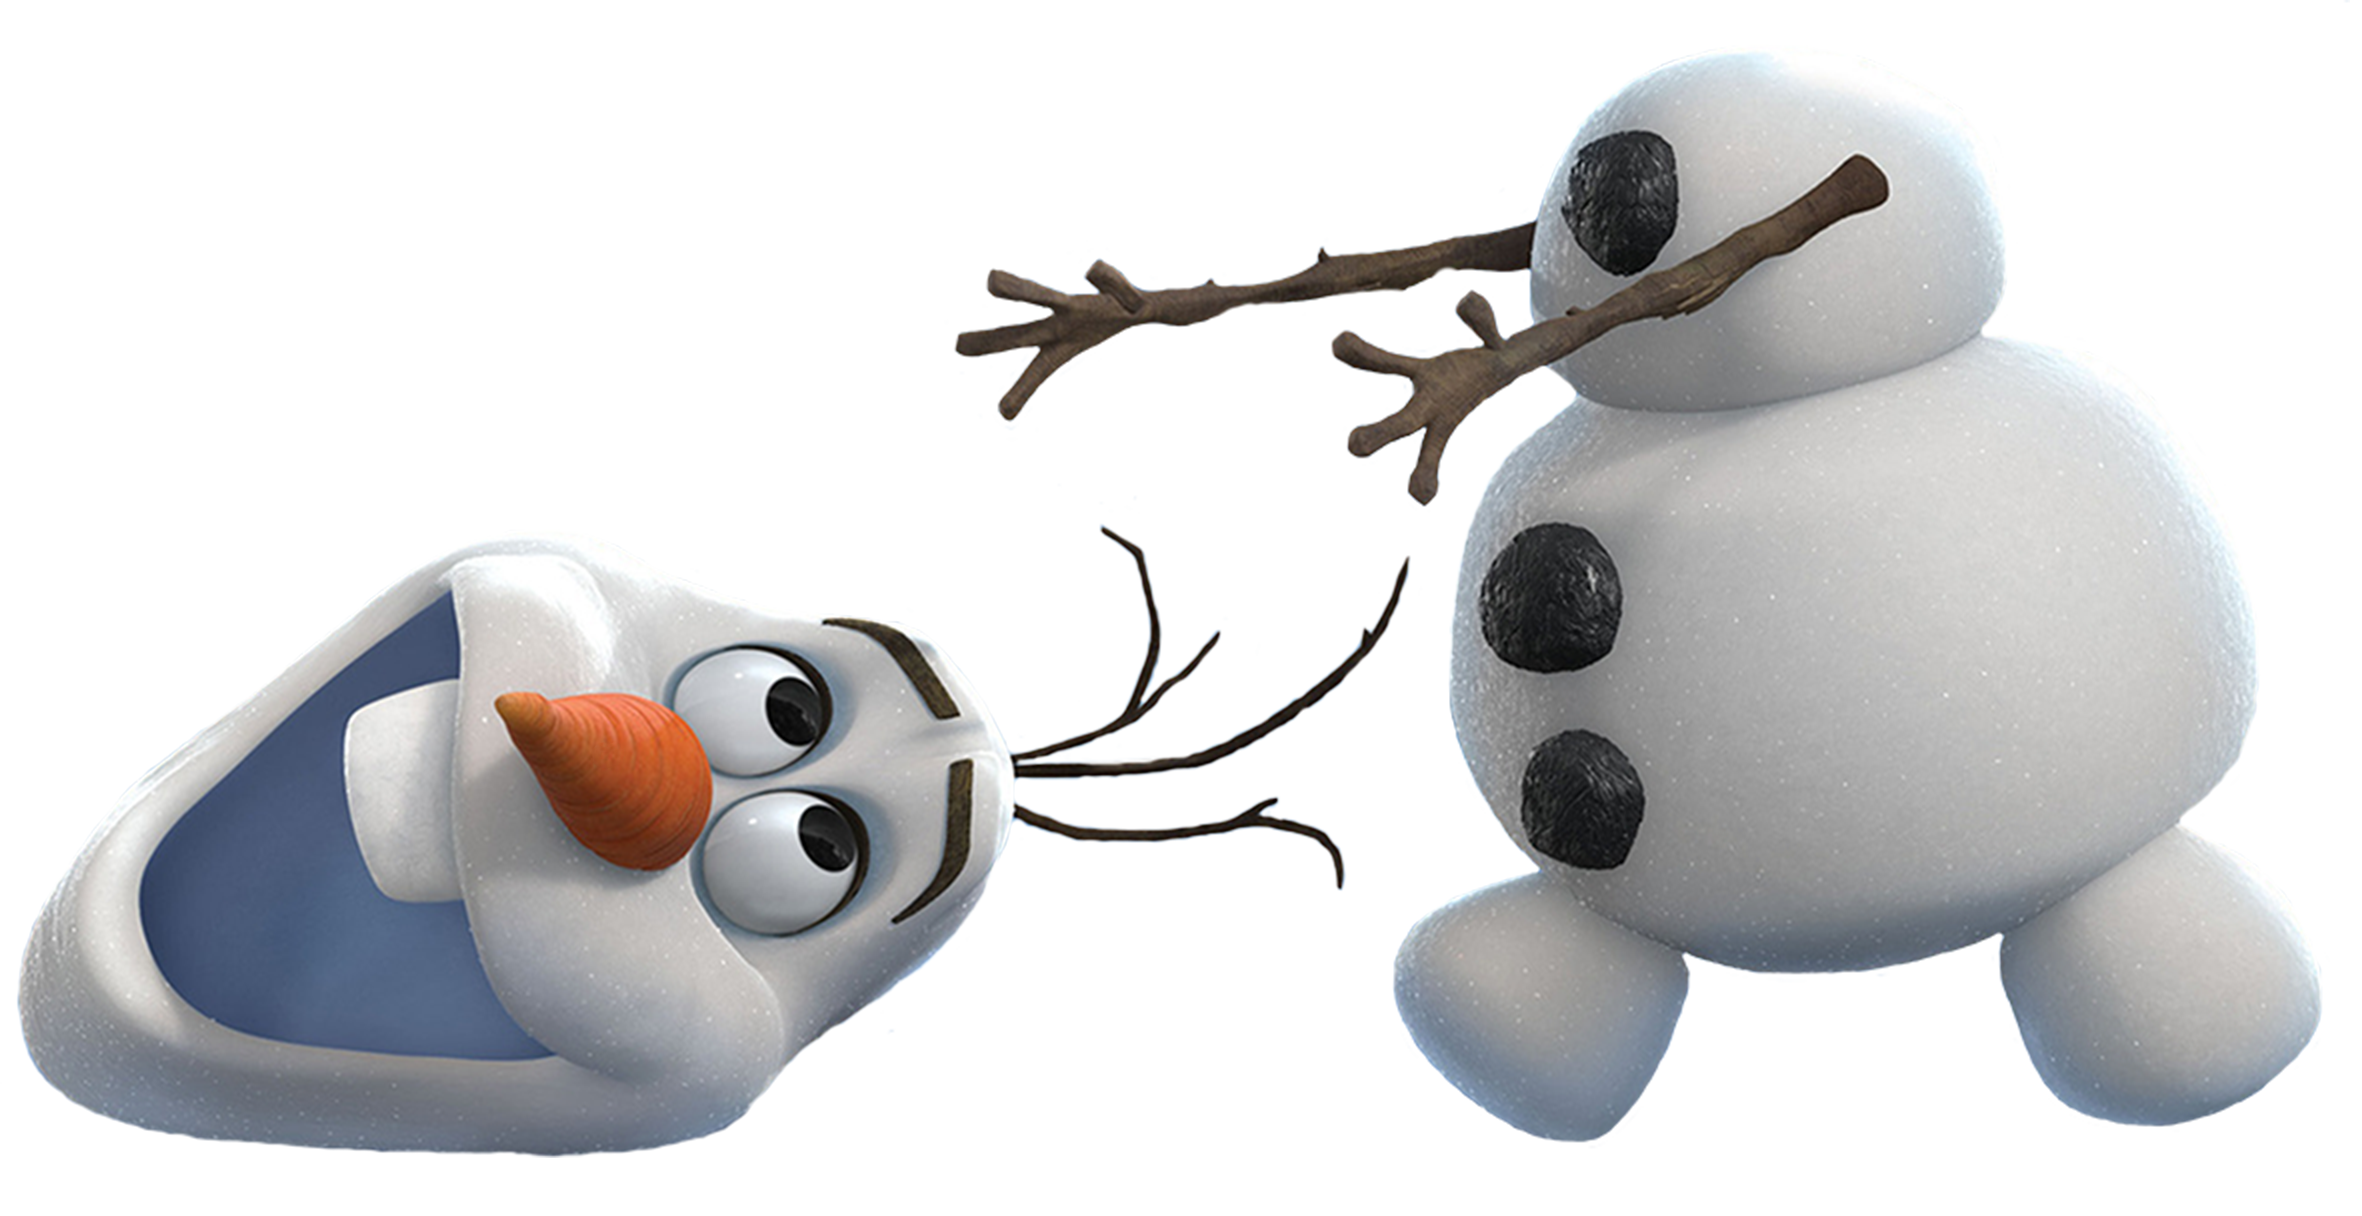 Frozen Disney Olaf02